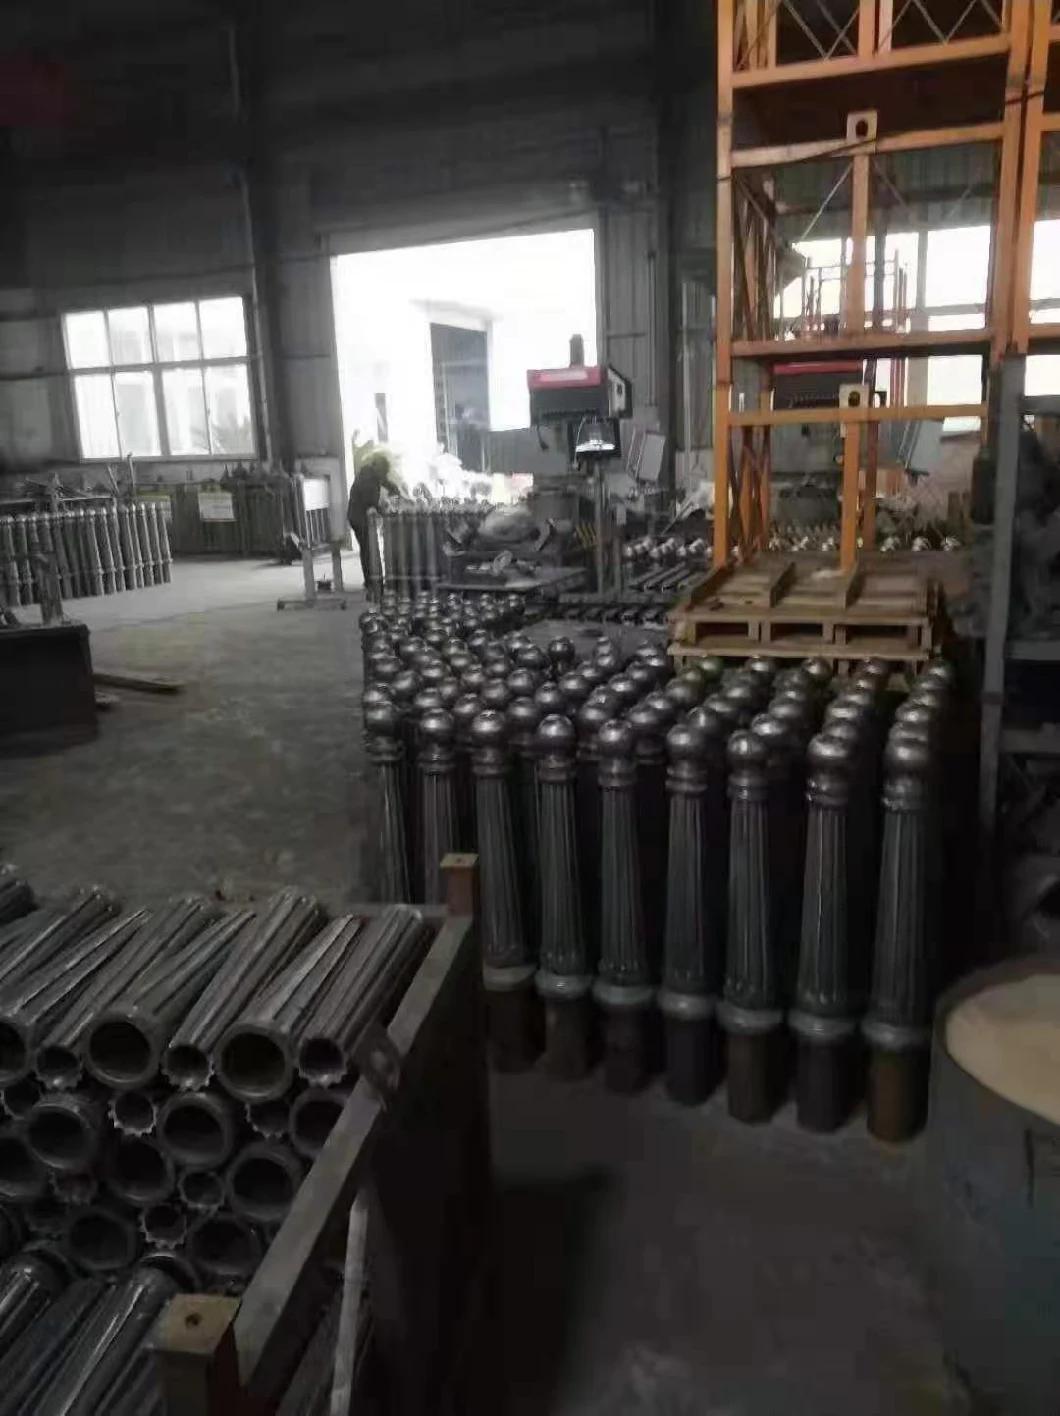 China Factory OEM Sand Casting Black Ductile Iron Aluminum Steel Parking Decorative Mooring Bollard Road Street safety Facility